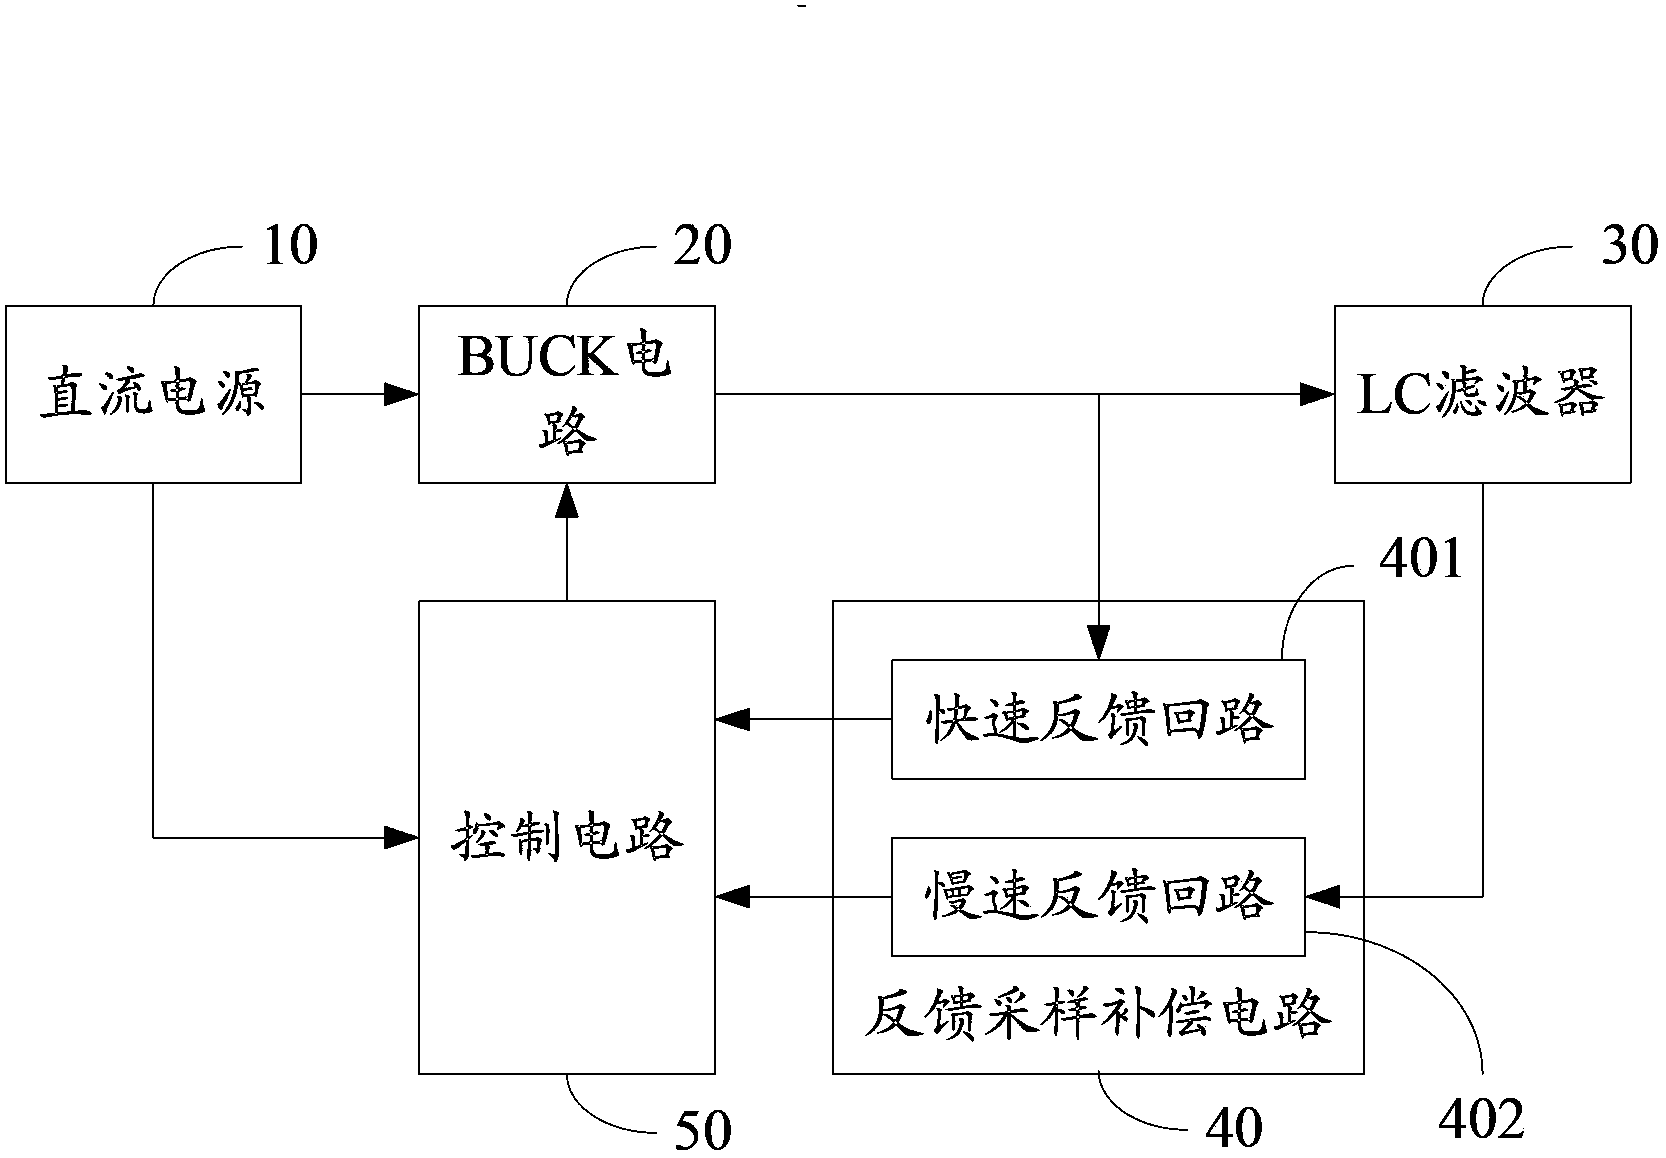 BUCK converter circuit